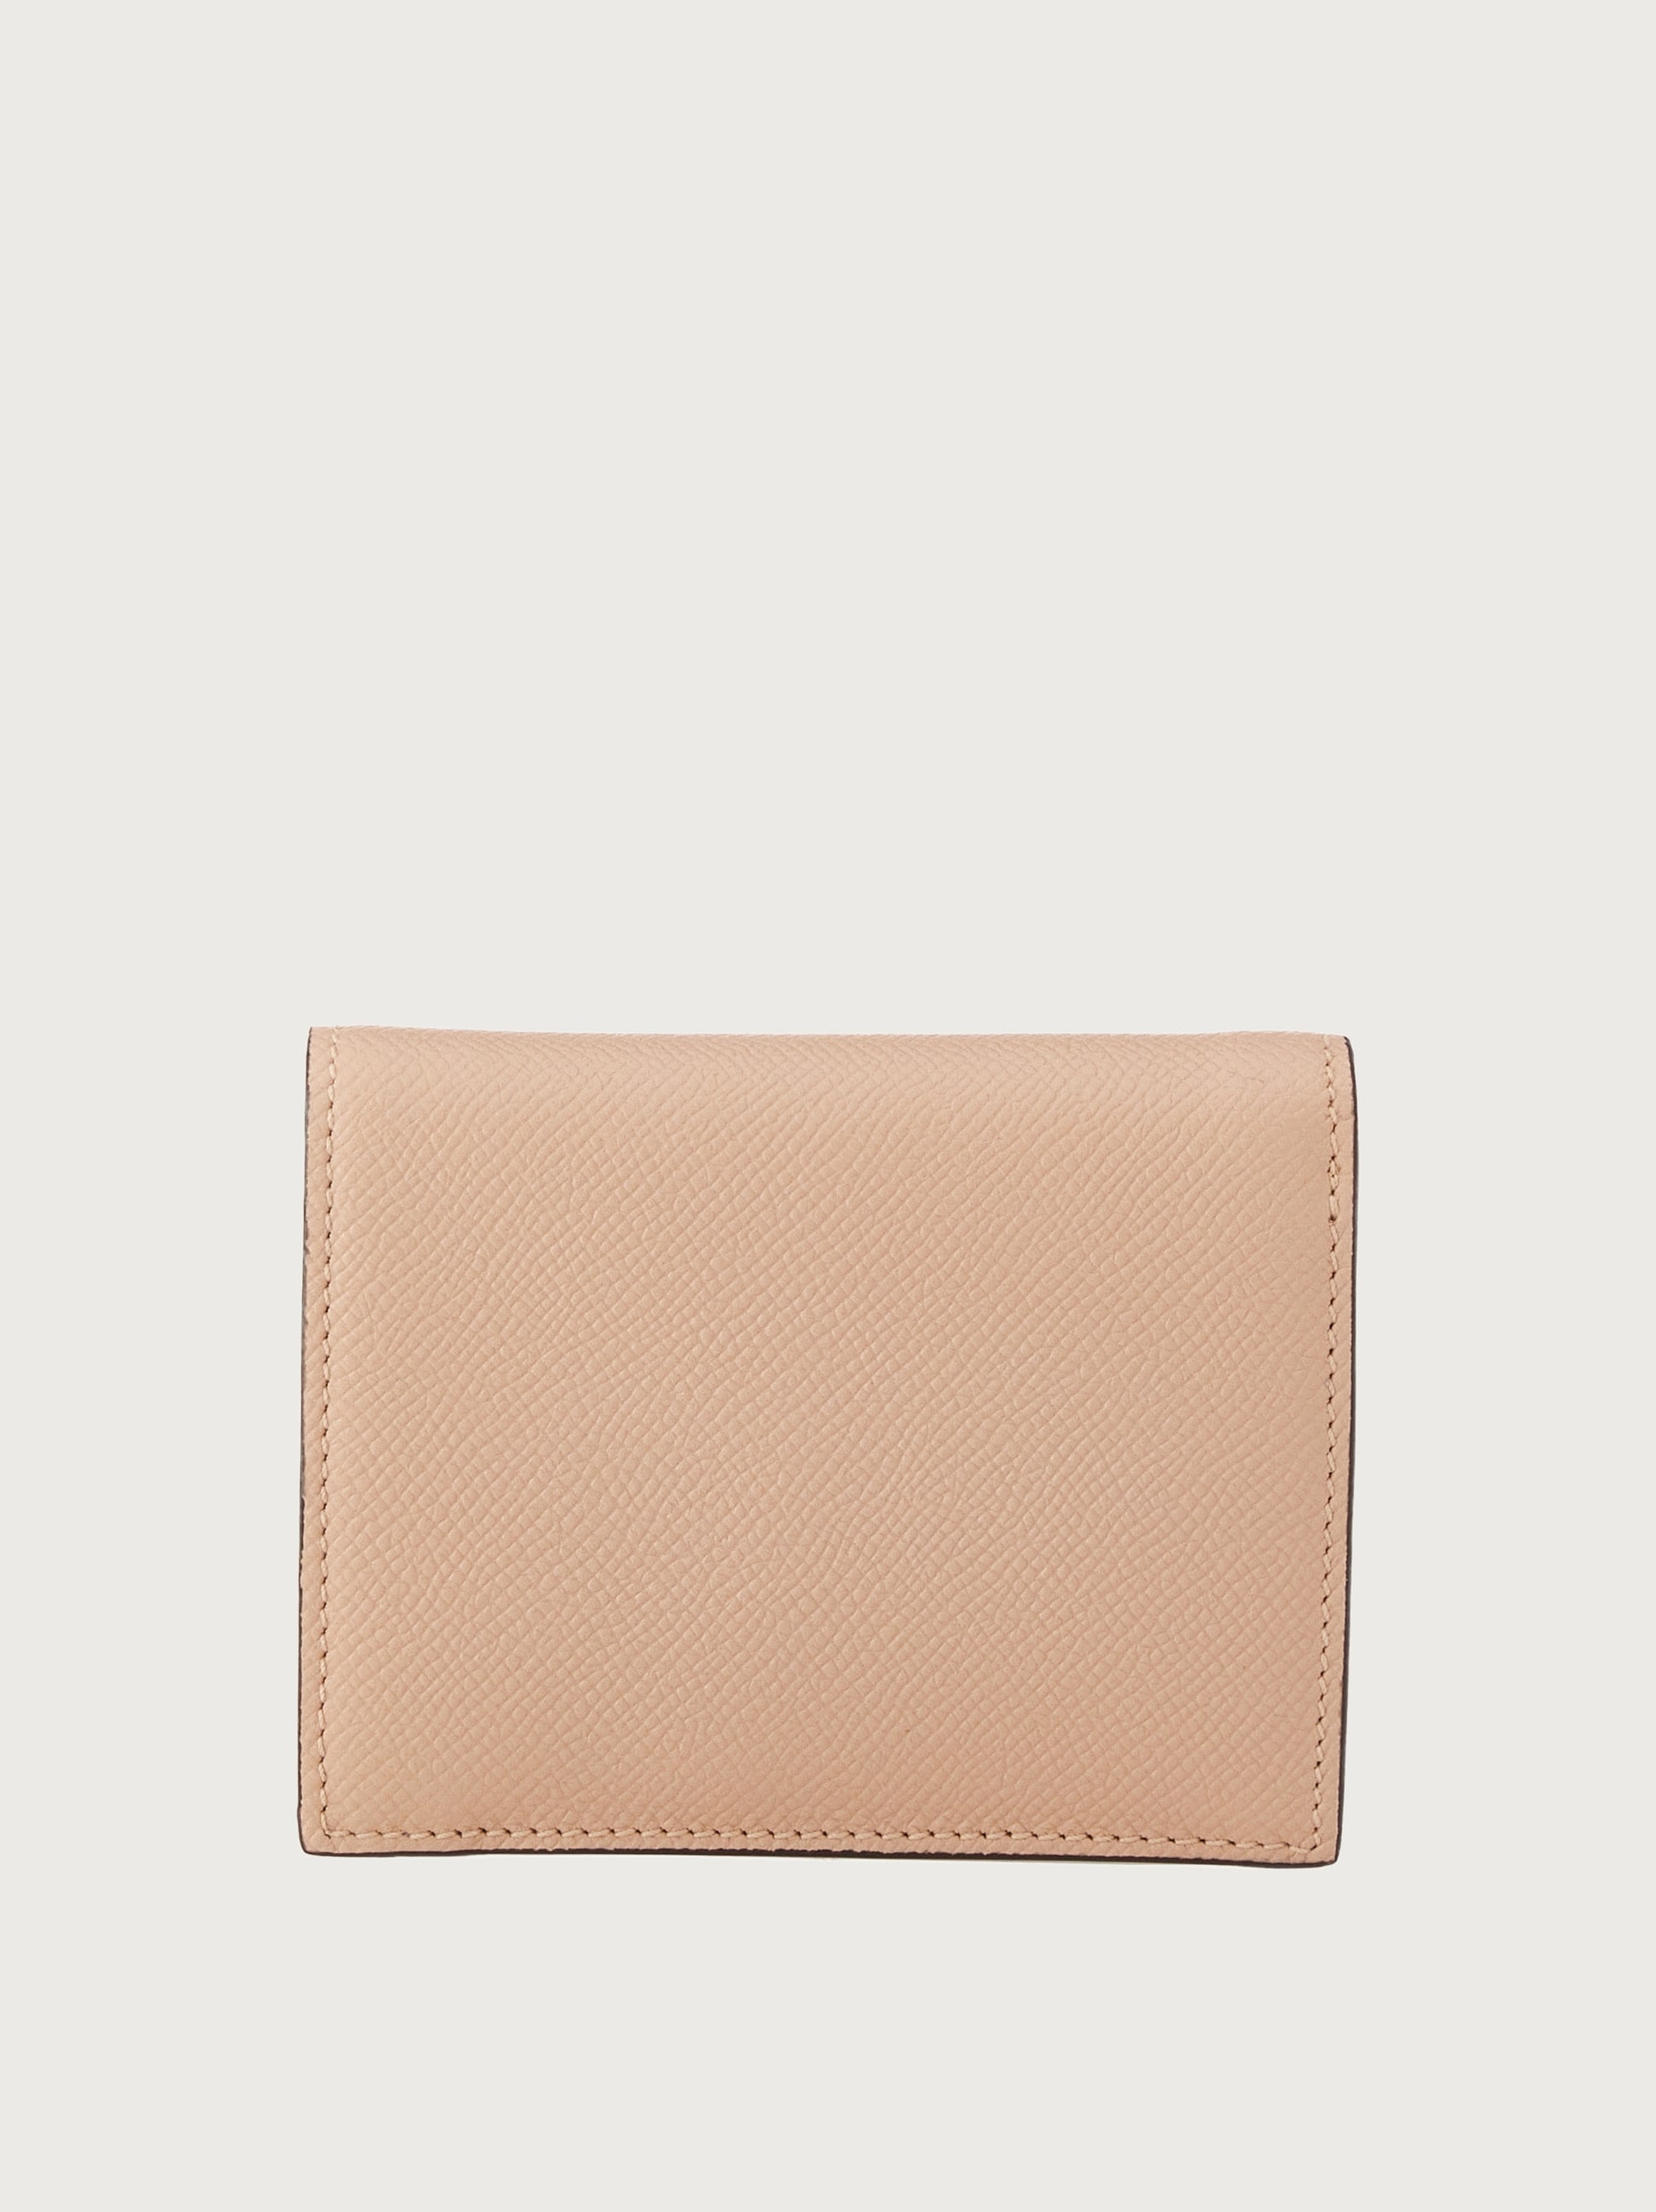 Gancini compact wallet - 3